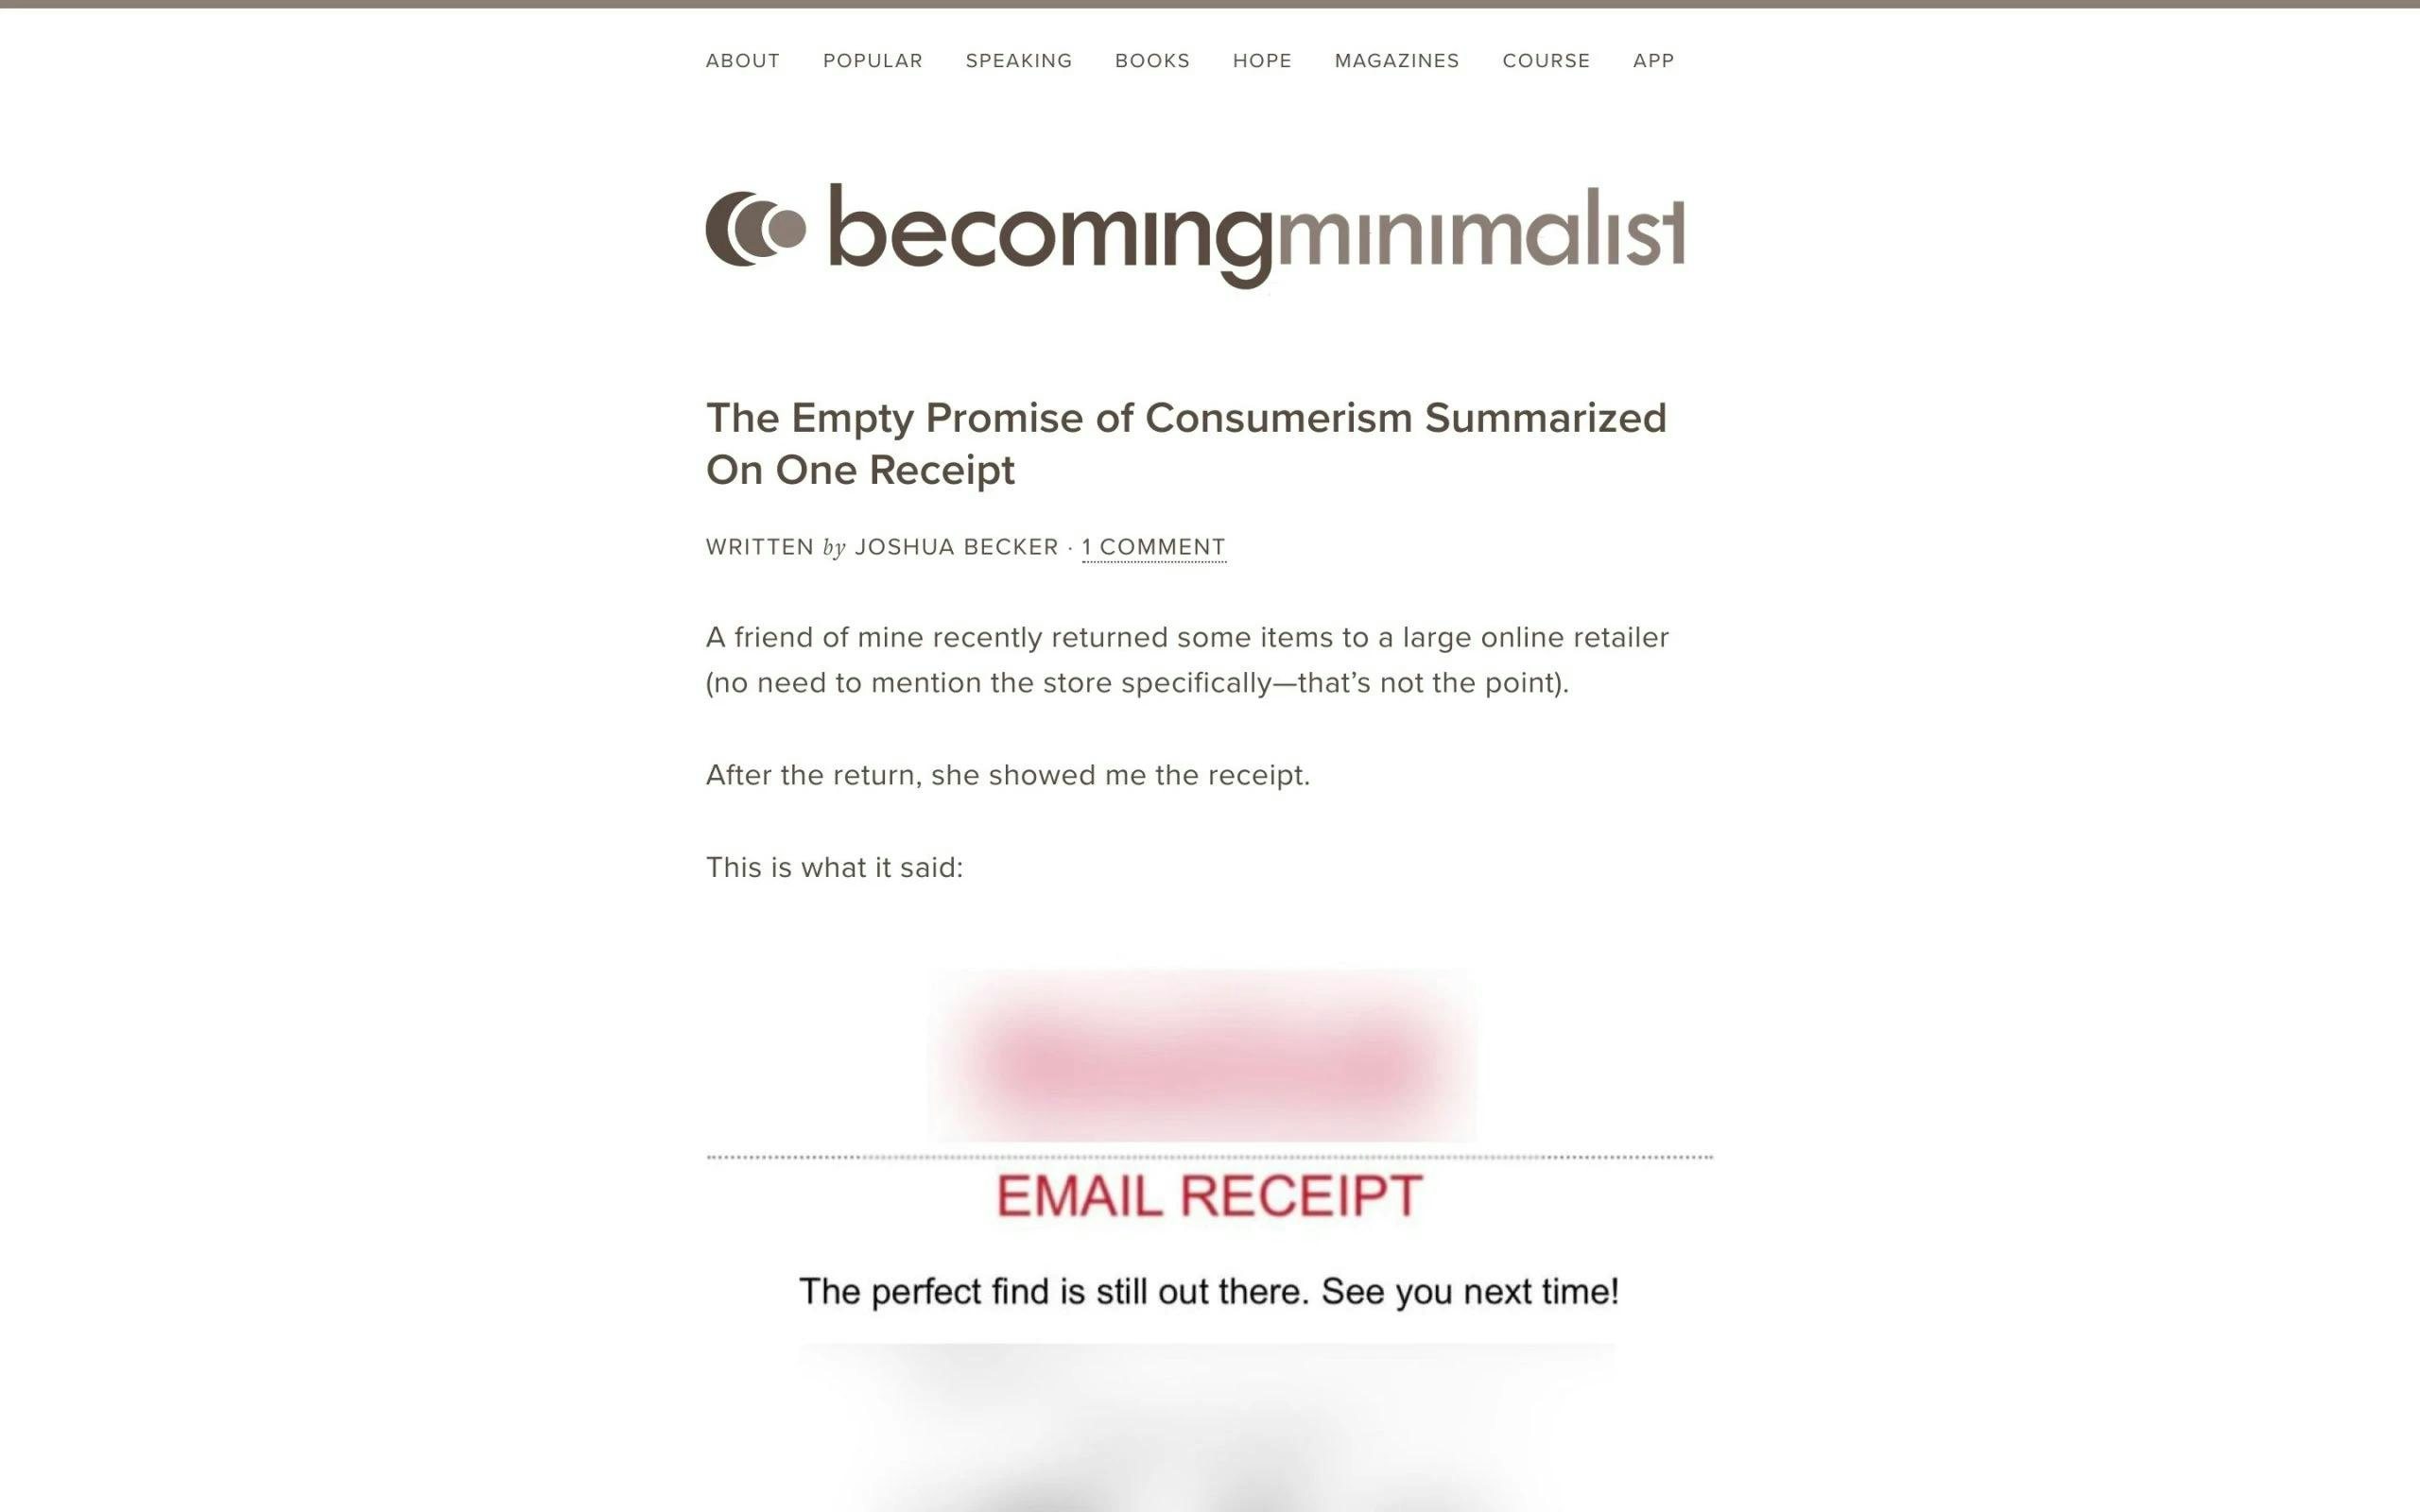 Becoming Minimalist